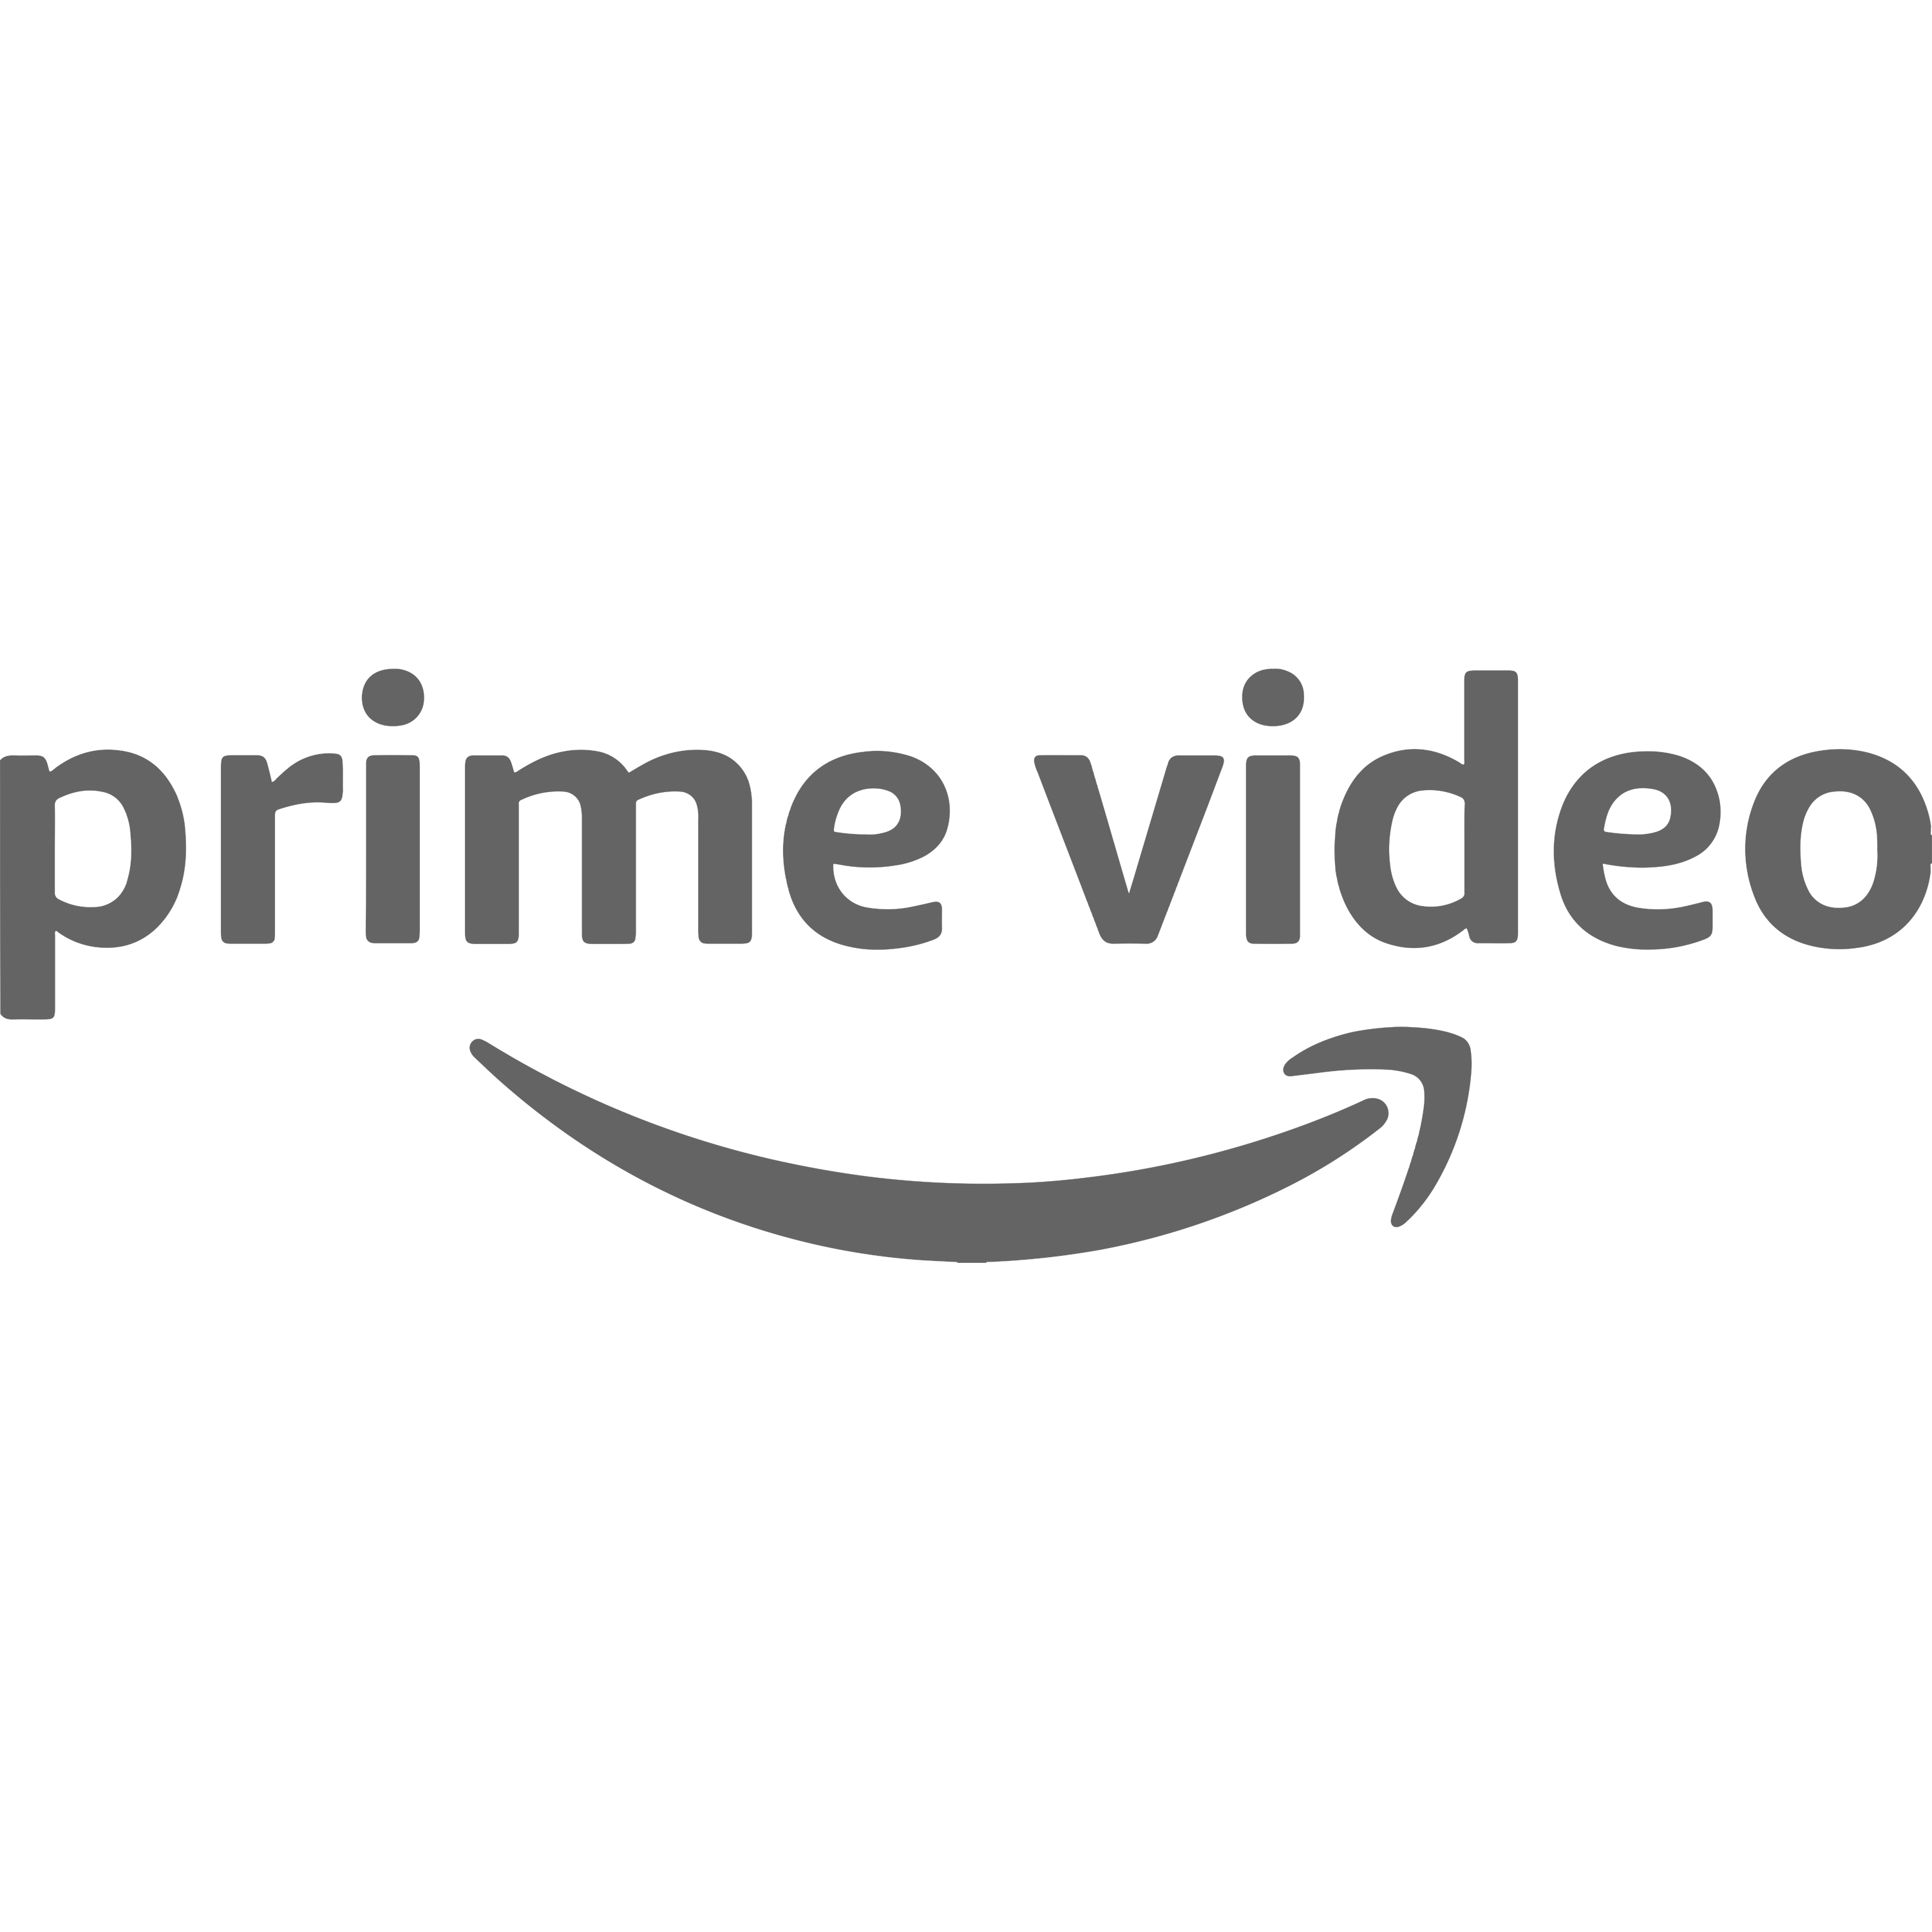 Prime Video Logo Transparent Picture